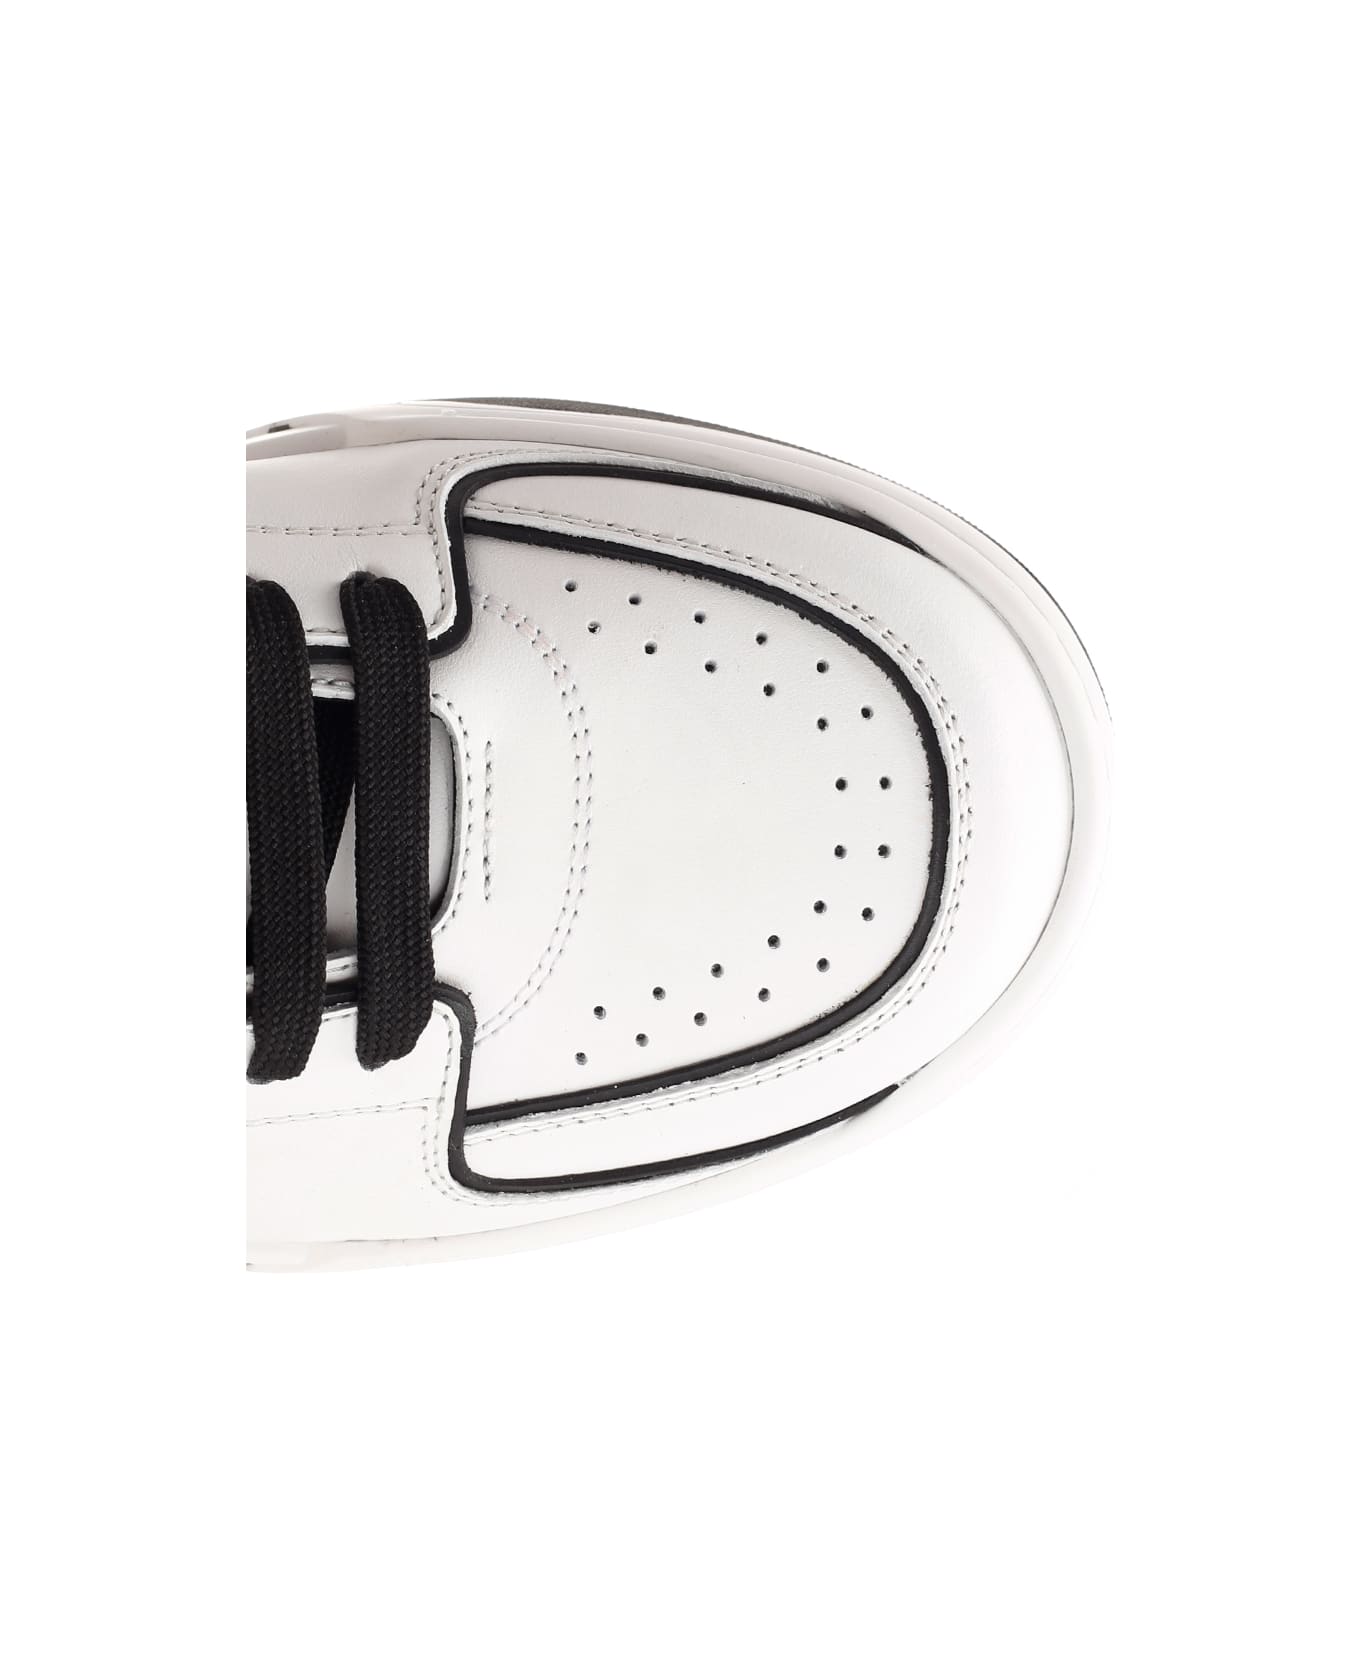 Dolce & Gabbana 'new Roma' Sneaker - Bianco/nero スニーカー